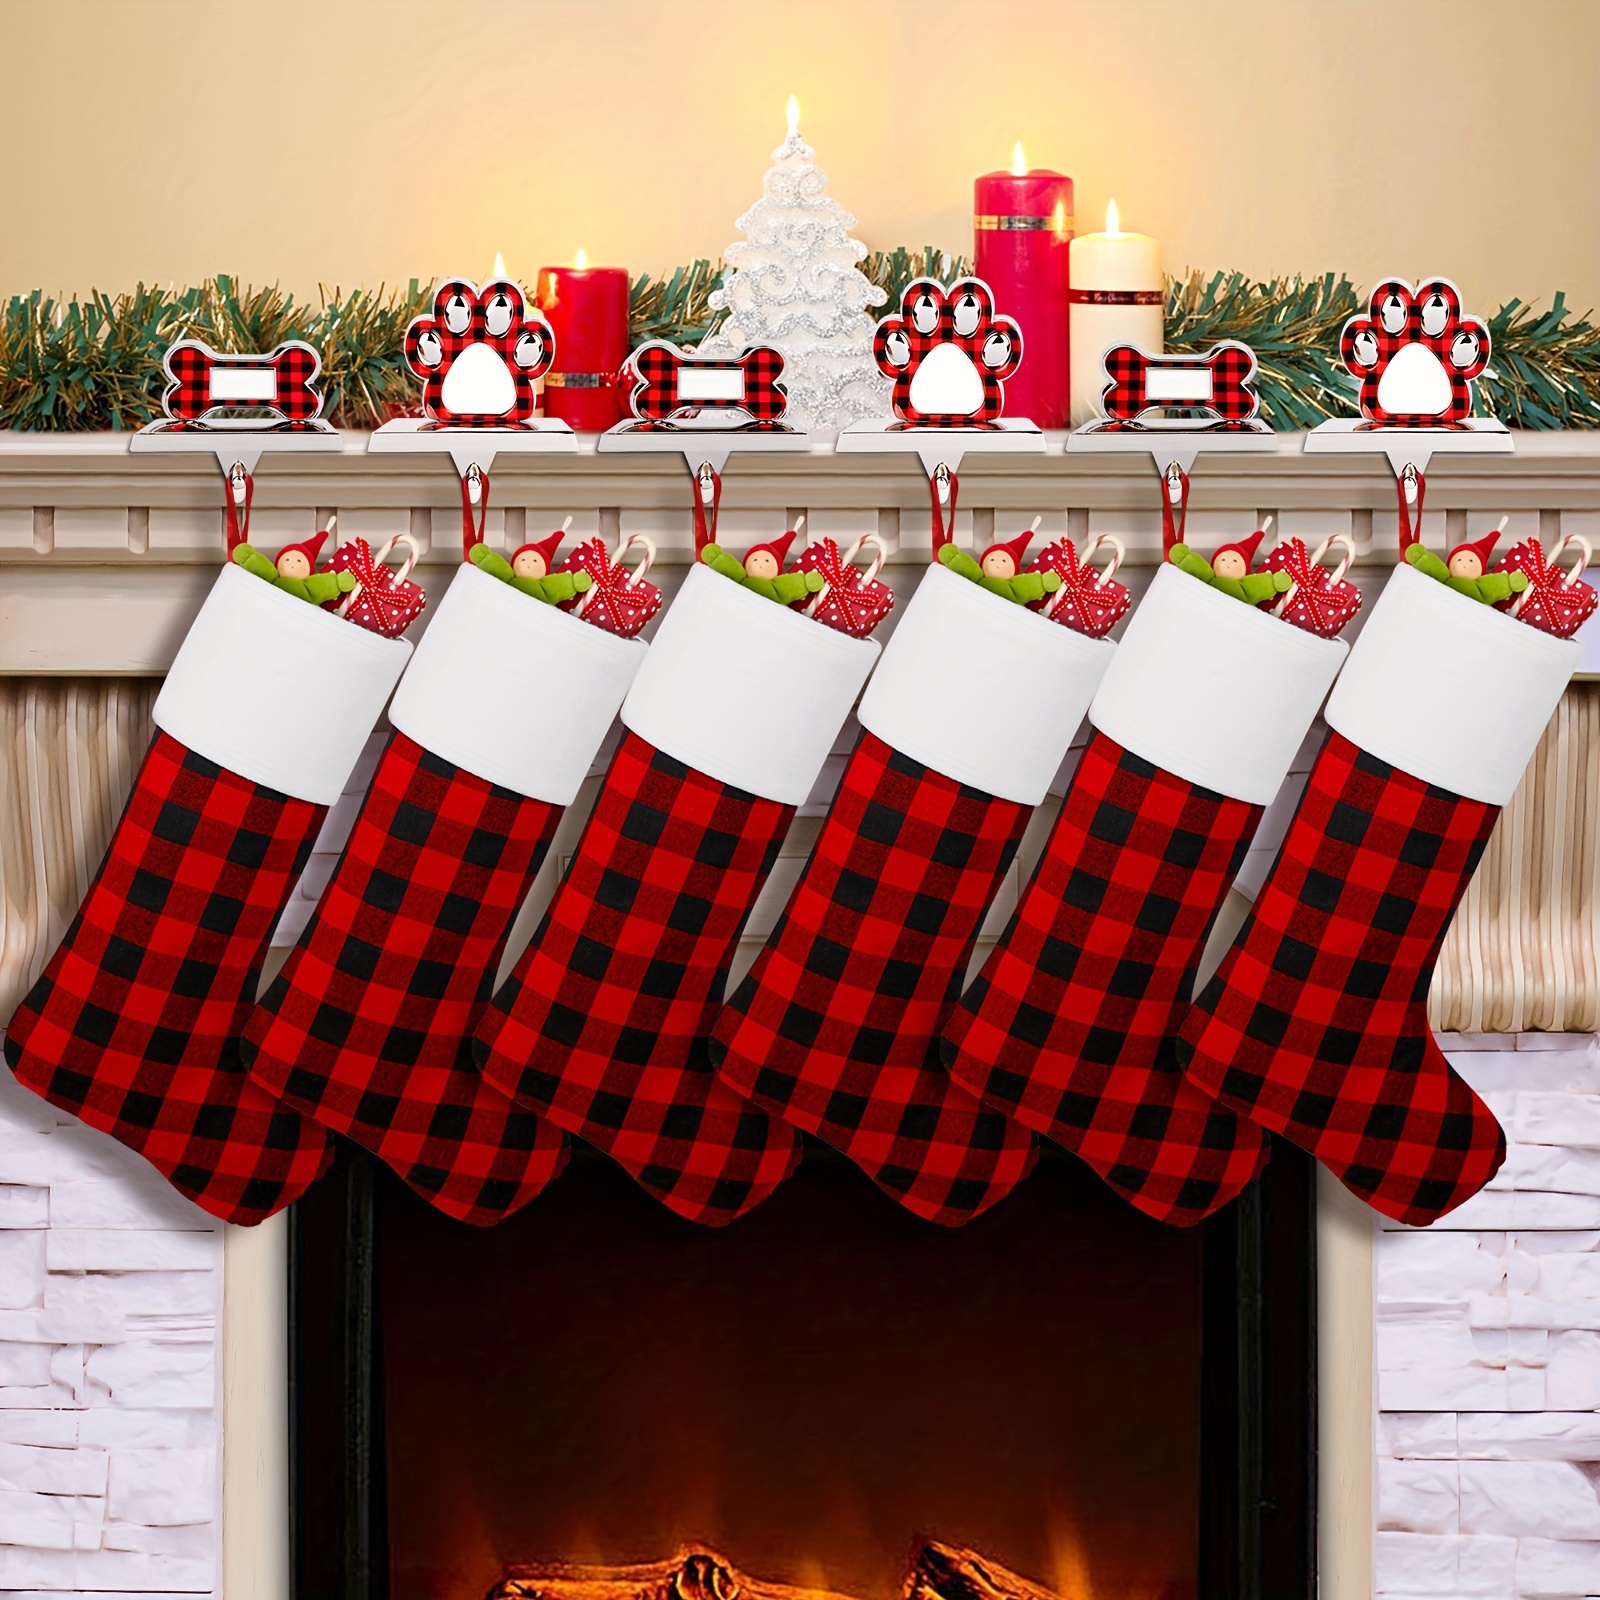 Christmas Mantle- Buffalo Plaid Stockings and Rustic Decor